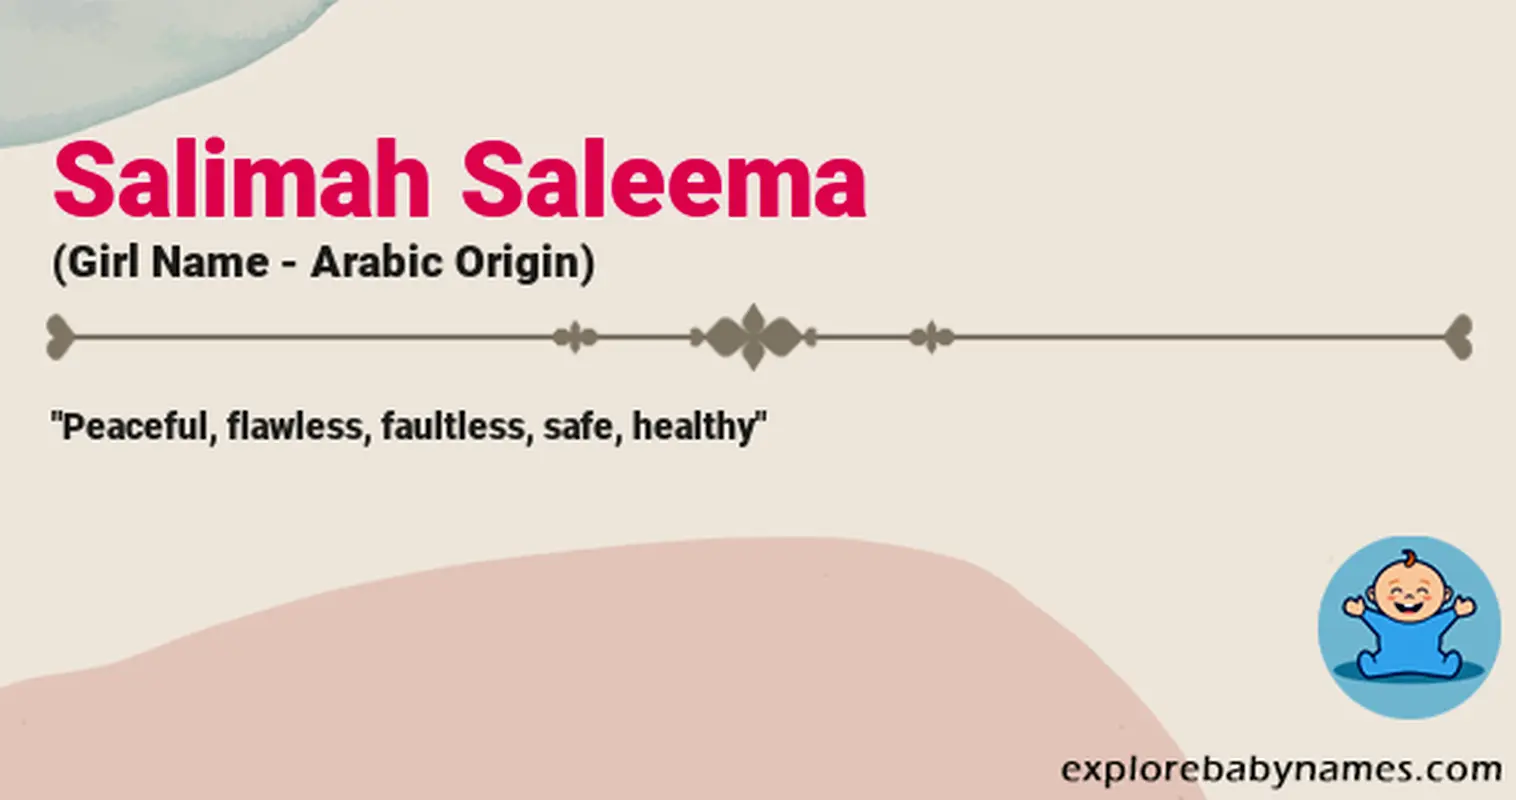 Meaning of Salimah Saleema